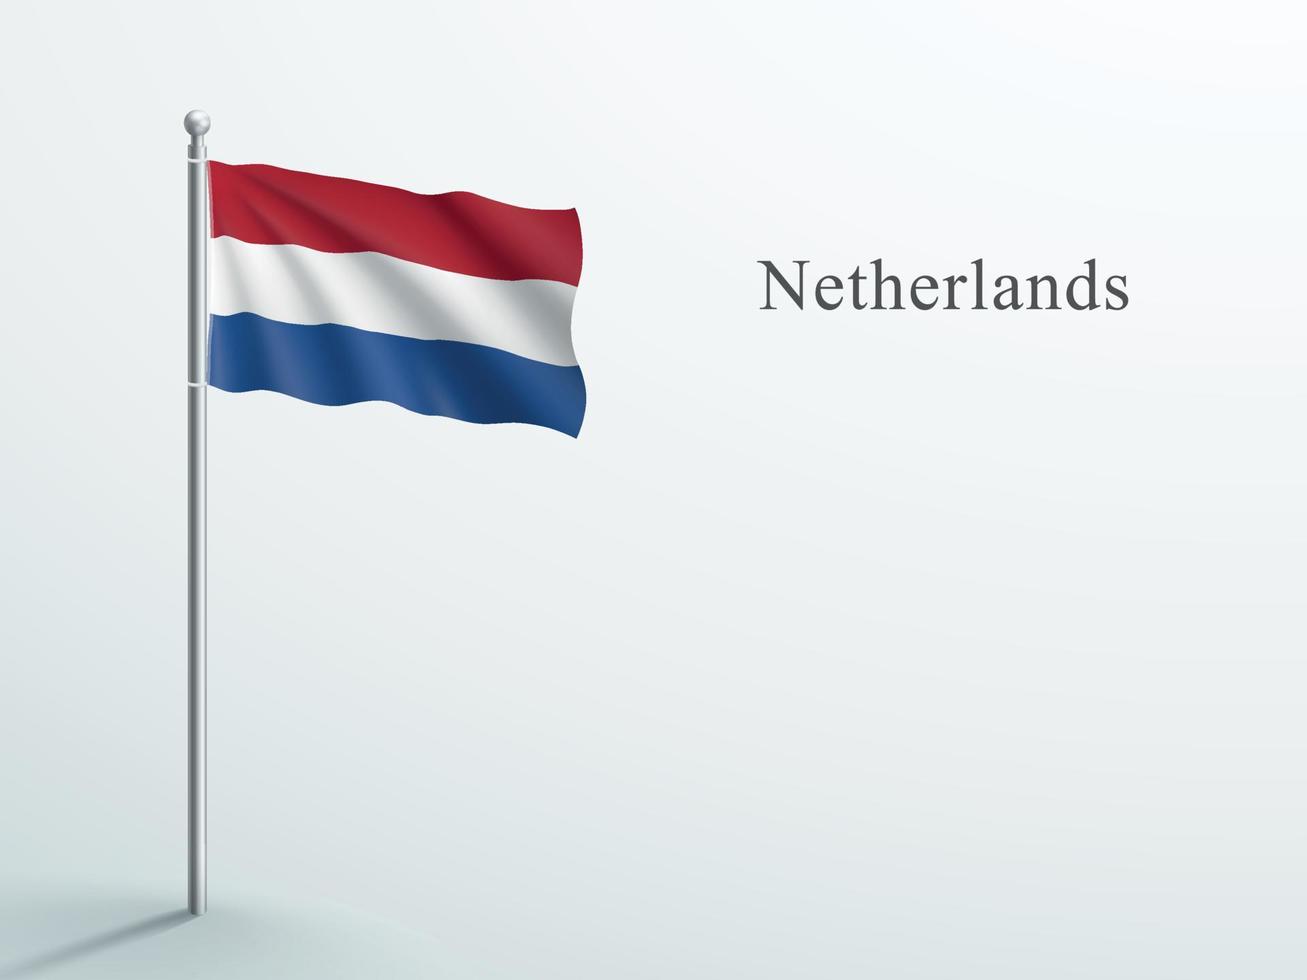 elemento 3d da bandeira holandesa acenando no mastro de aço vetor